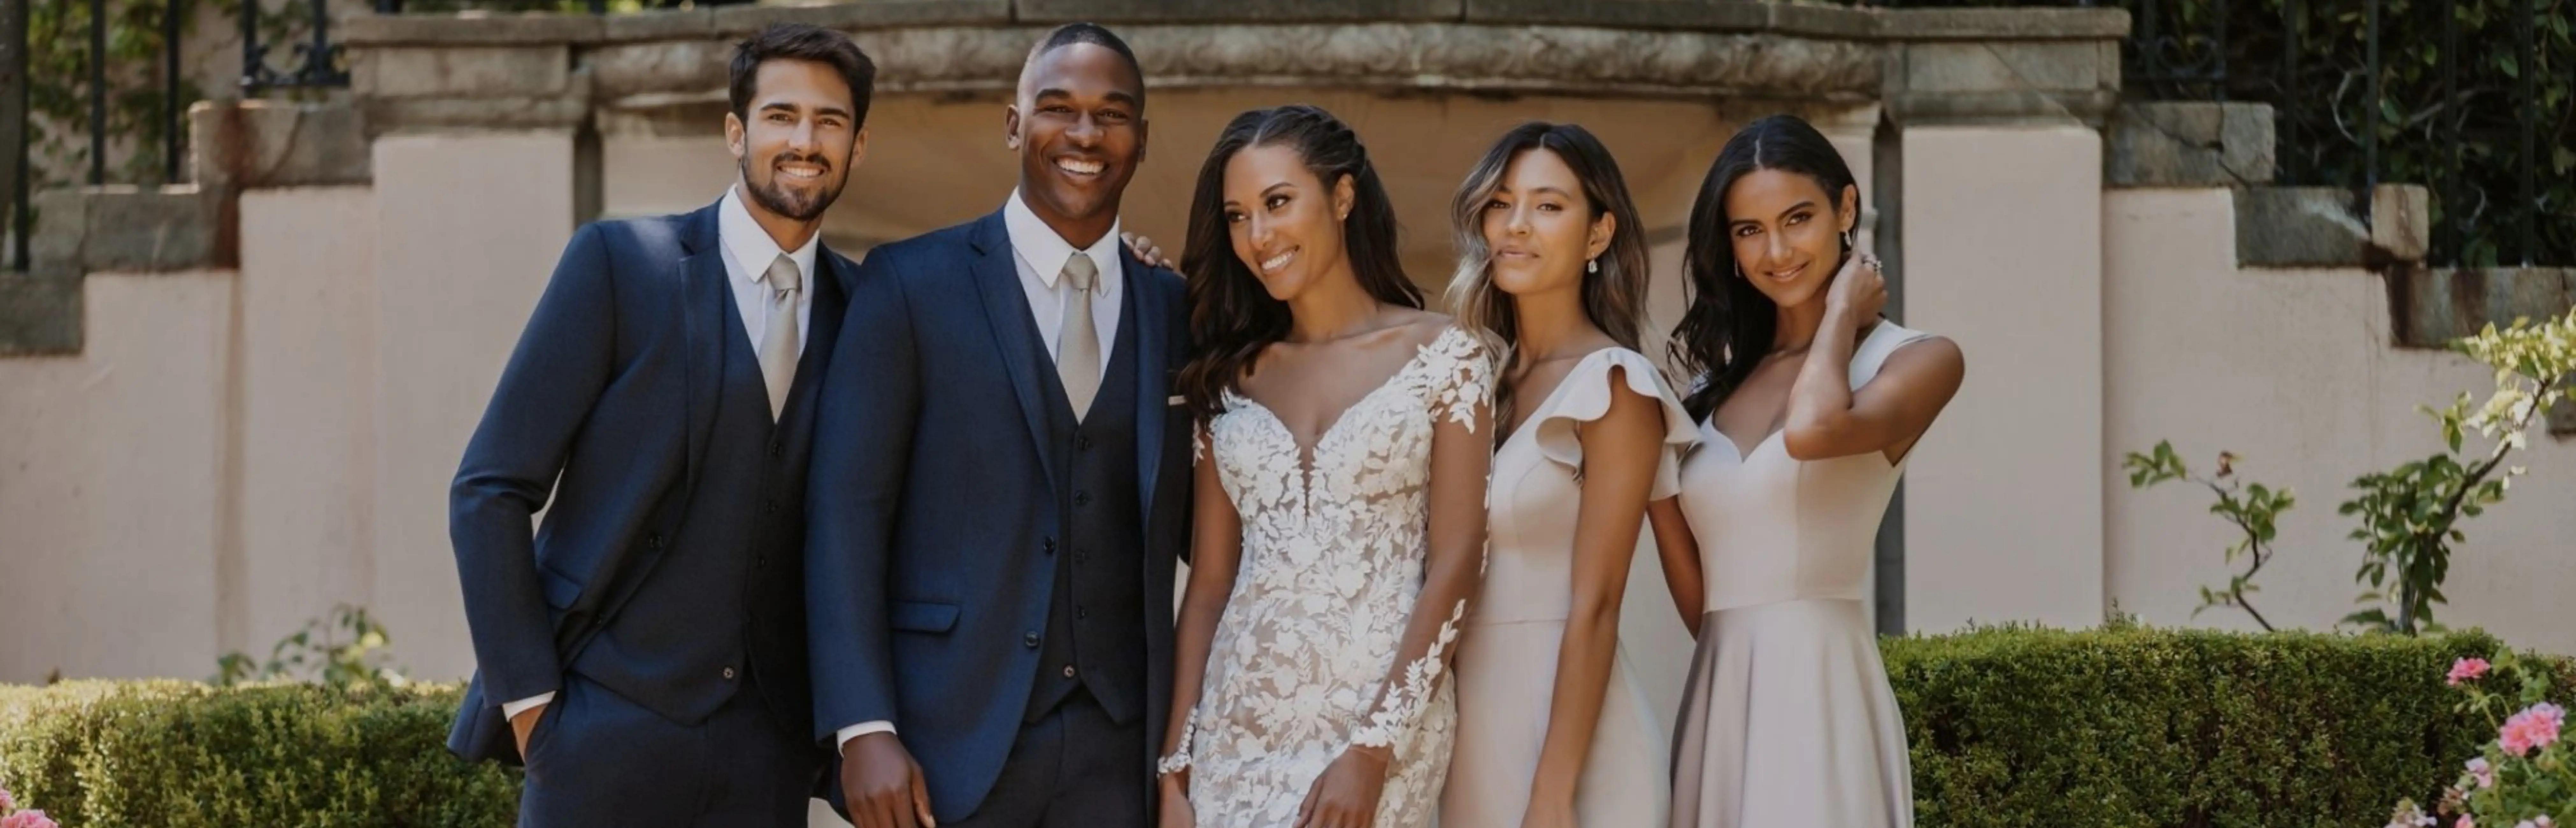 Photo of Michelle's Bridal & Tuxedo Bride, groom and bridesmaids